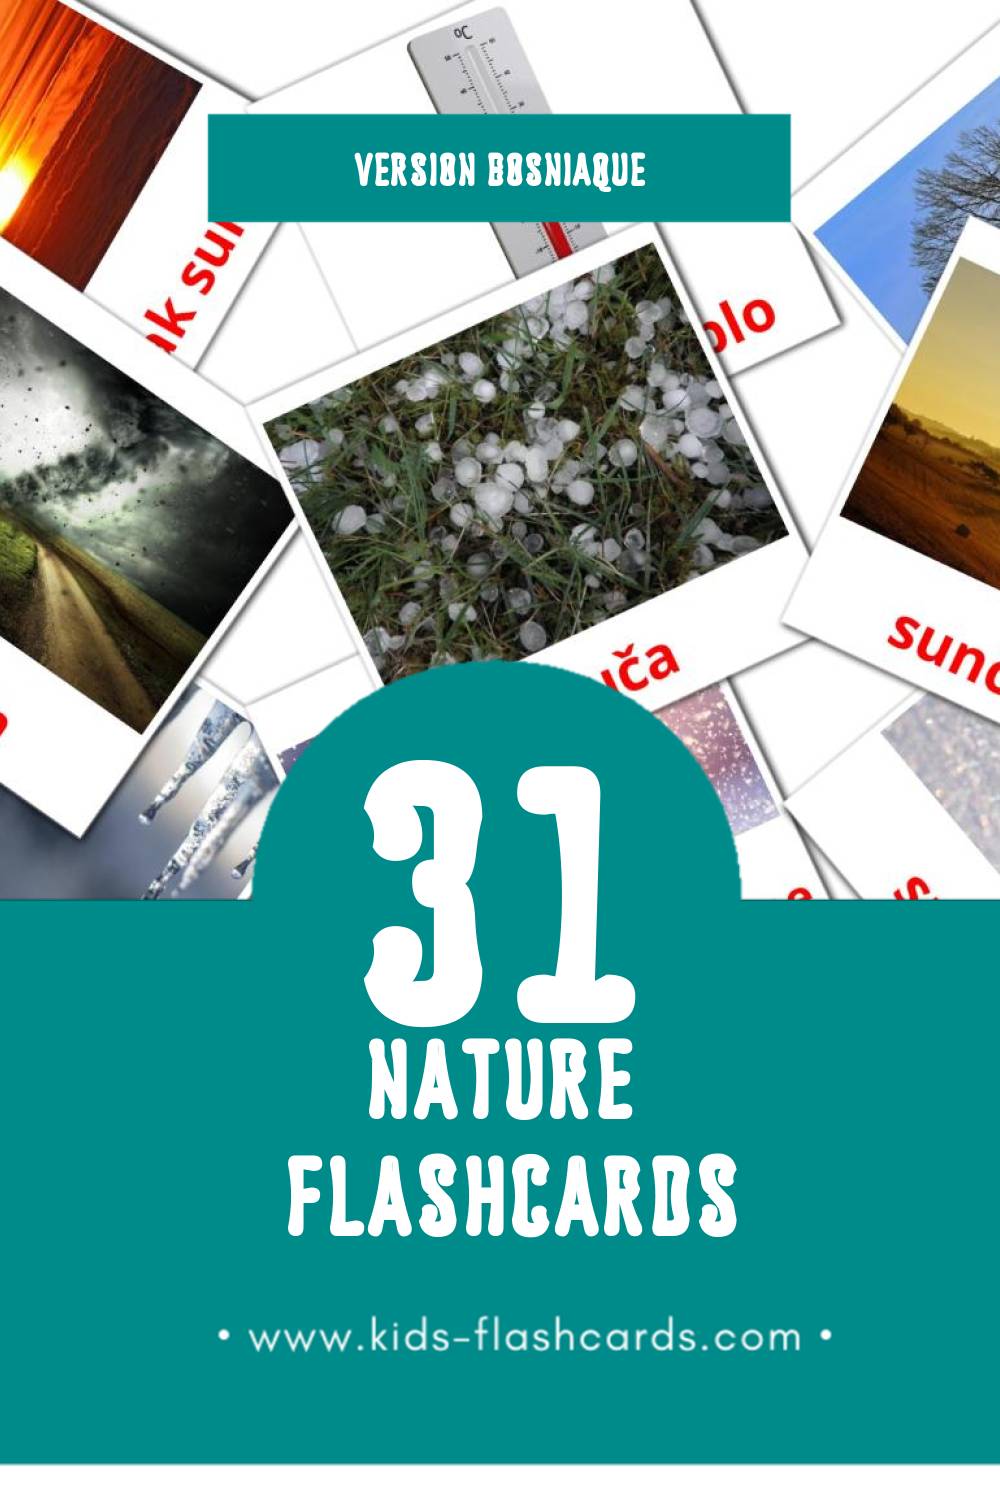 Flashcards Visual priroda pour les tout-petits (31 cartes en Bosniaque)